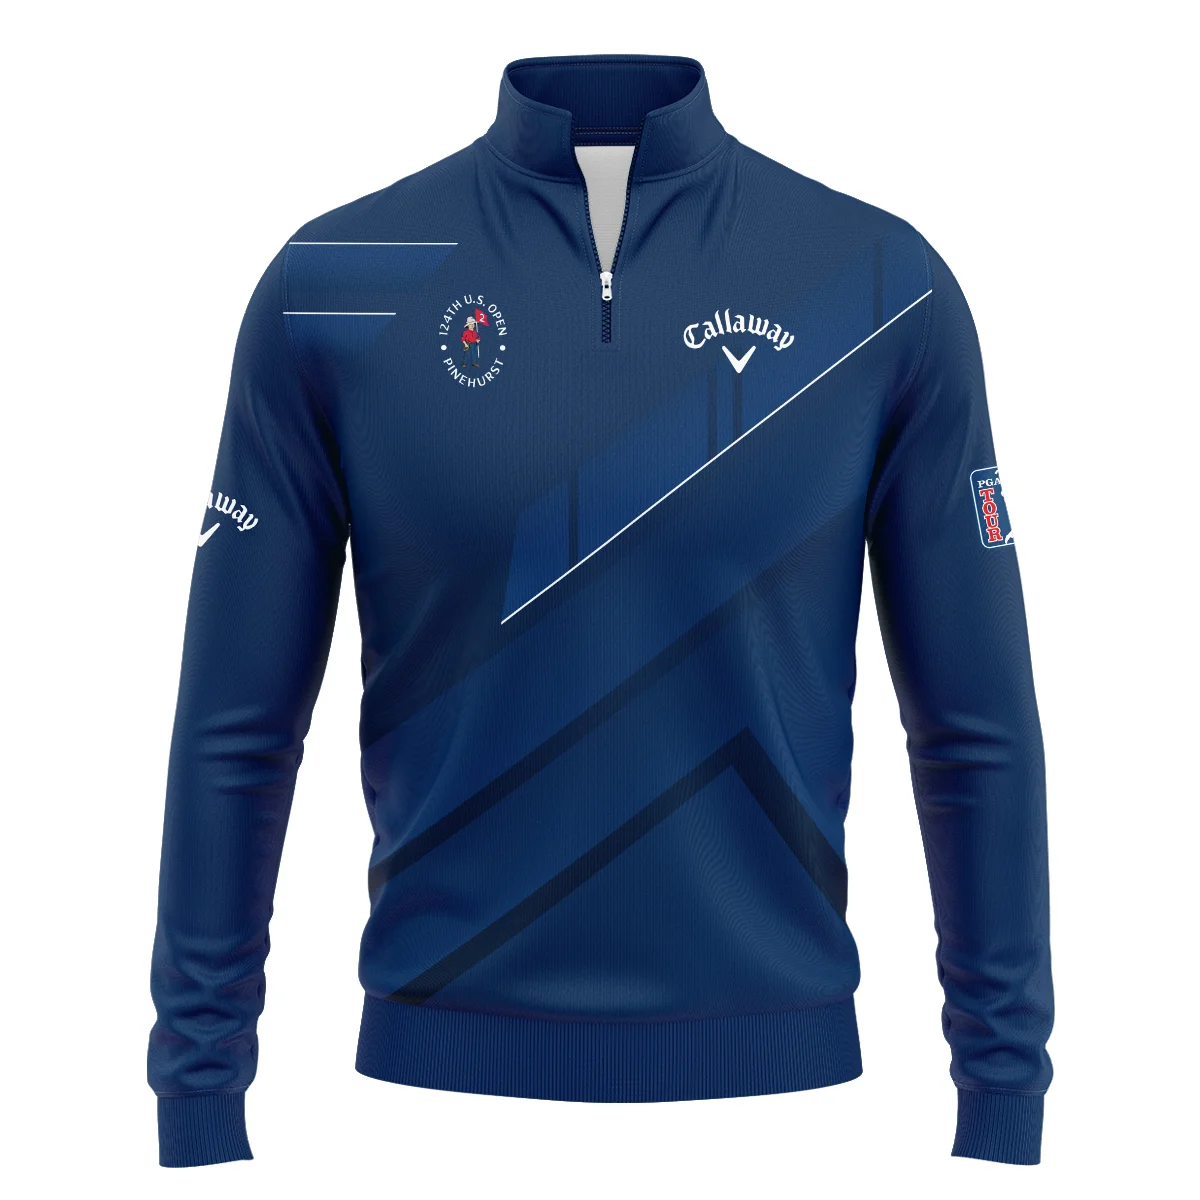 Callaway 124th U.S. Open Pinehurst Blue Gradient With White Straight Line Sleeveless Jacket Style Classic Sleeveless Jacket